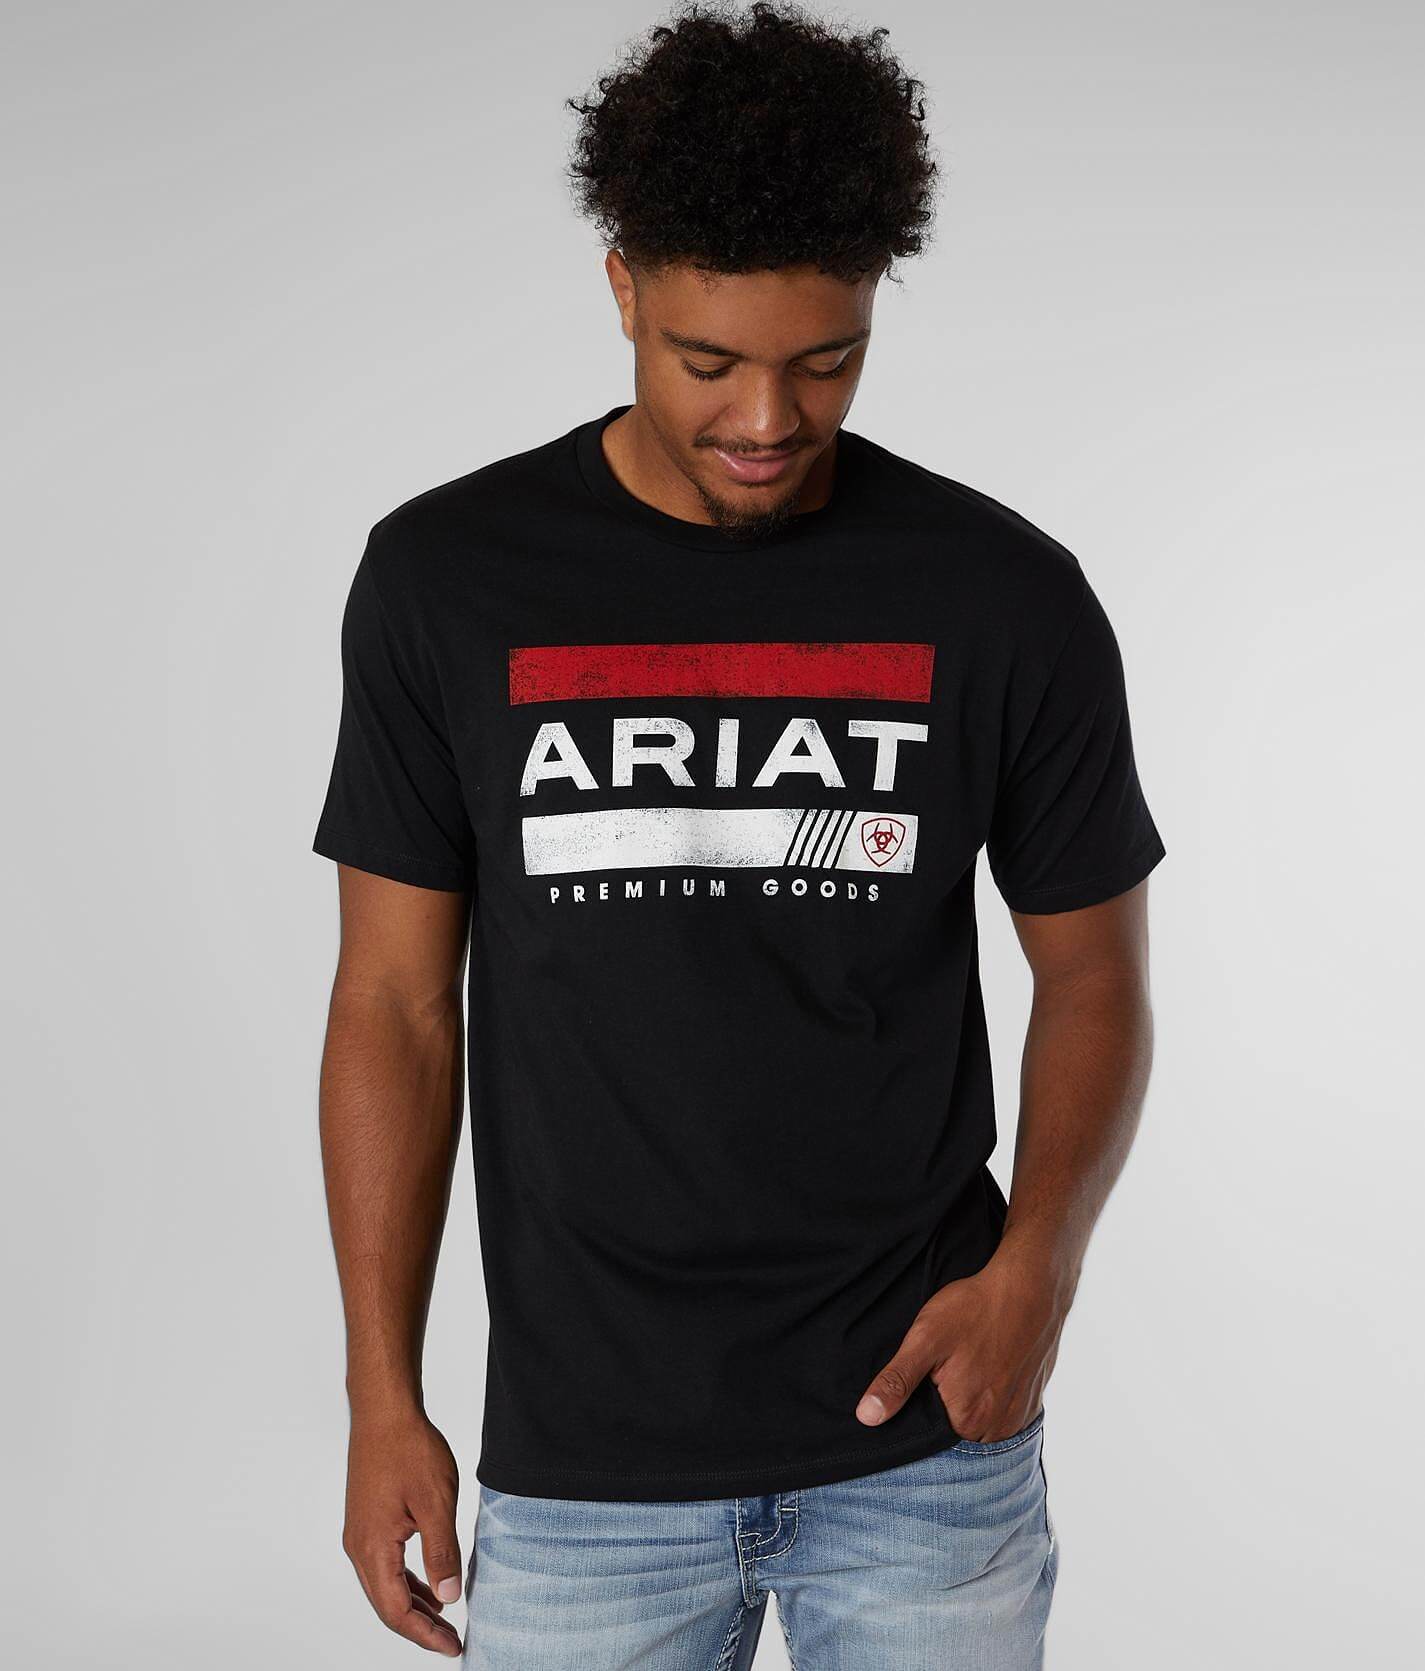 ariat shirts near me